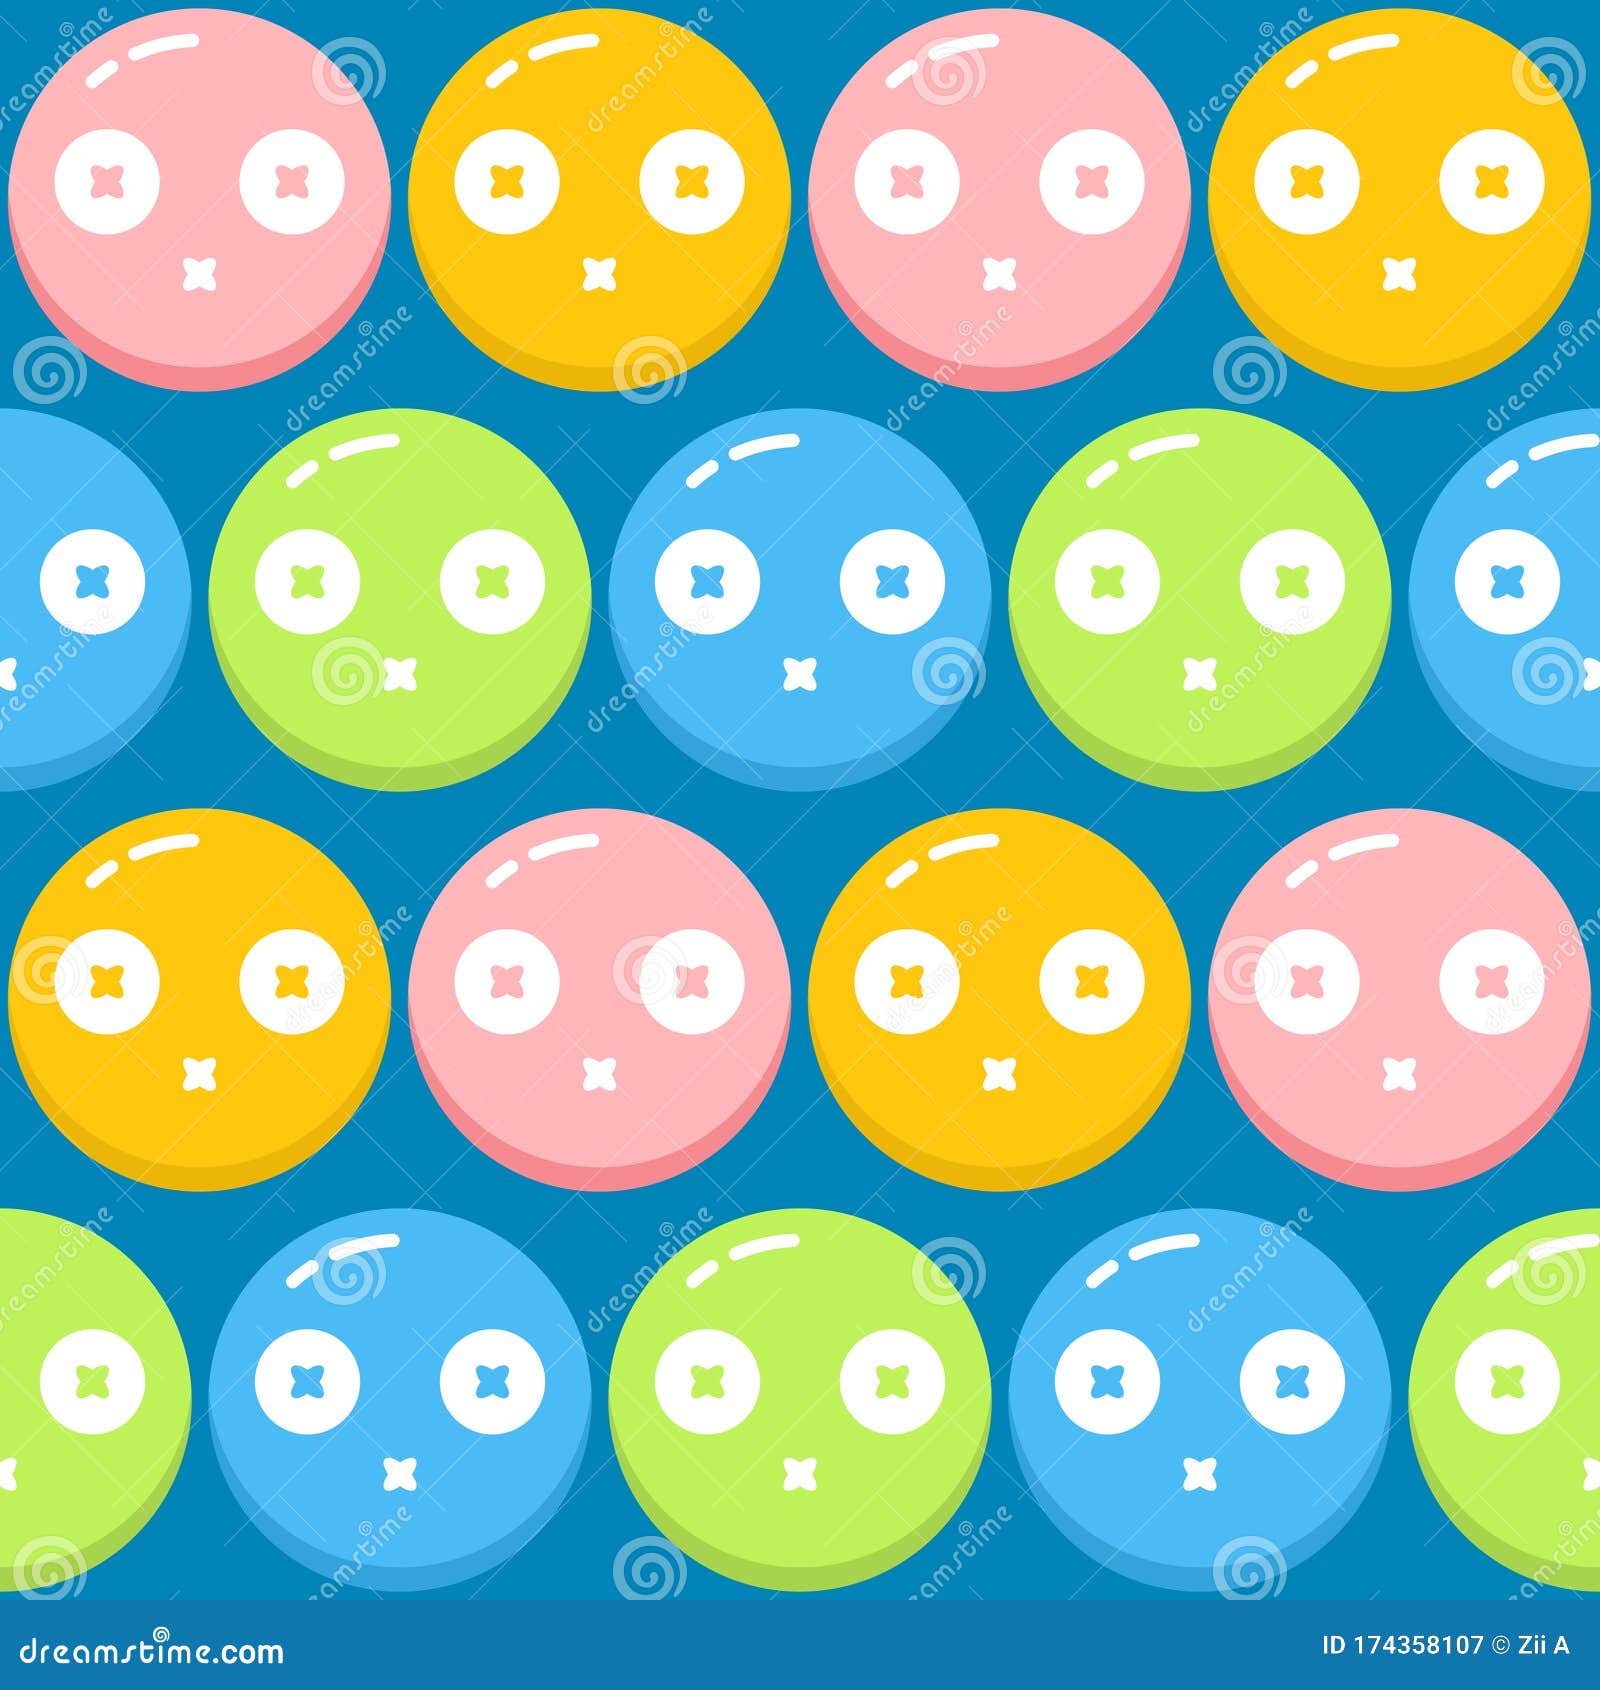 circle flat bubble facial emoticon seamless pattern | bufa series